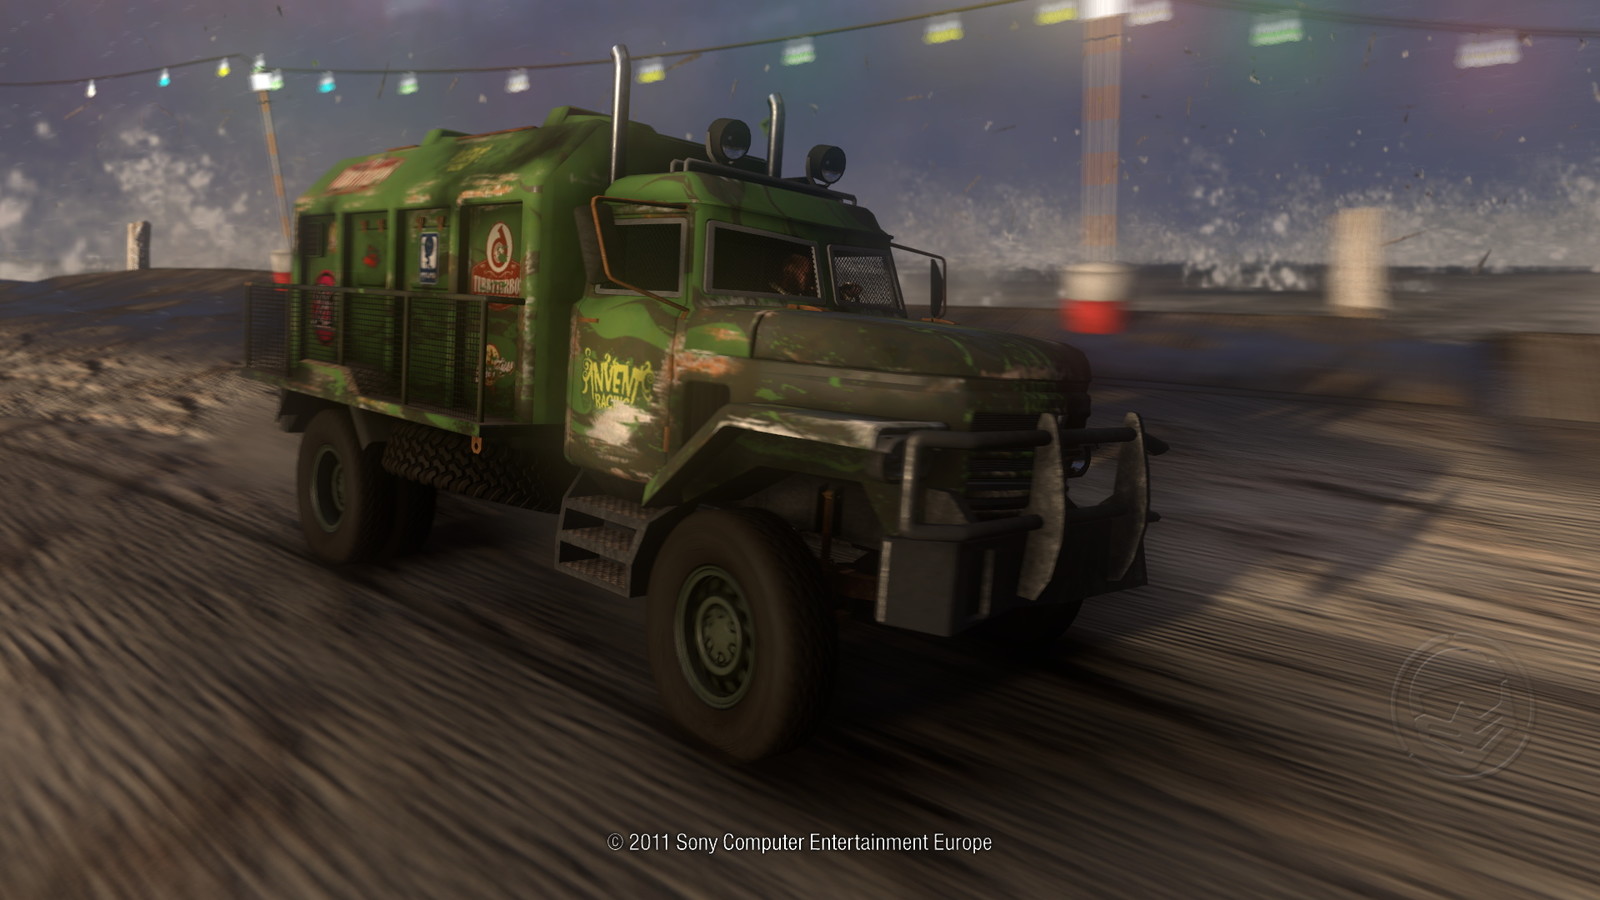 Molotov Shelka
(In-game screenshot)